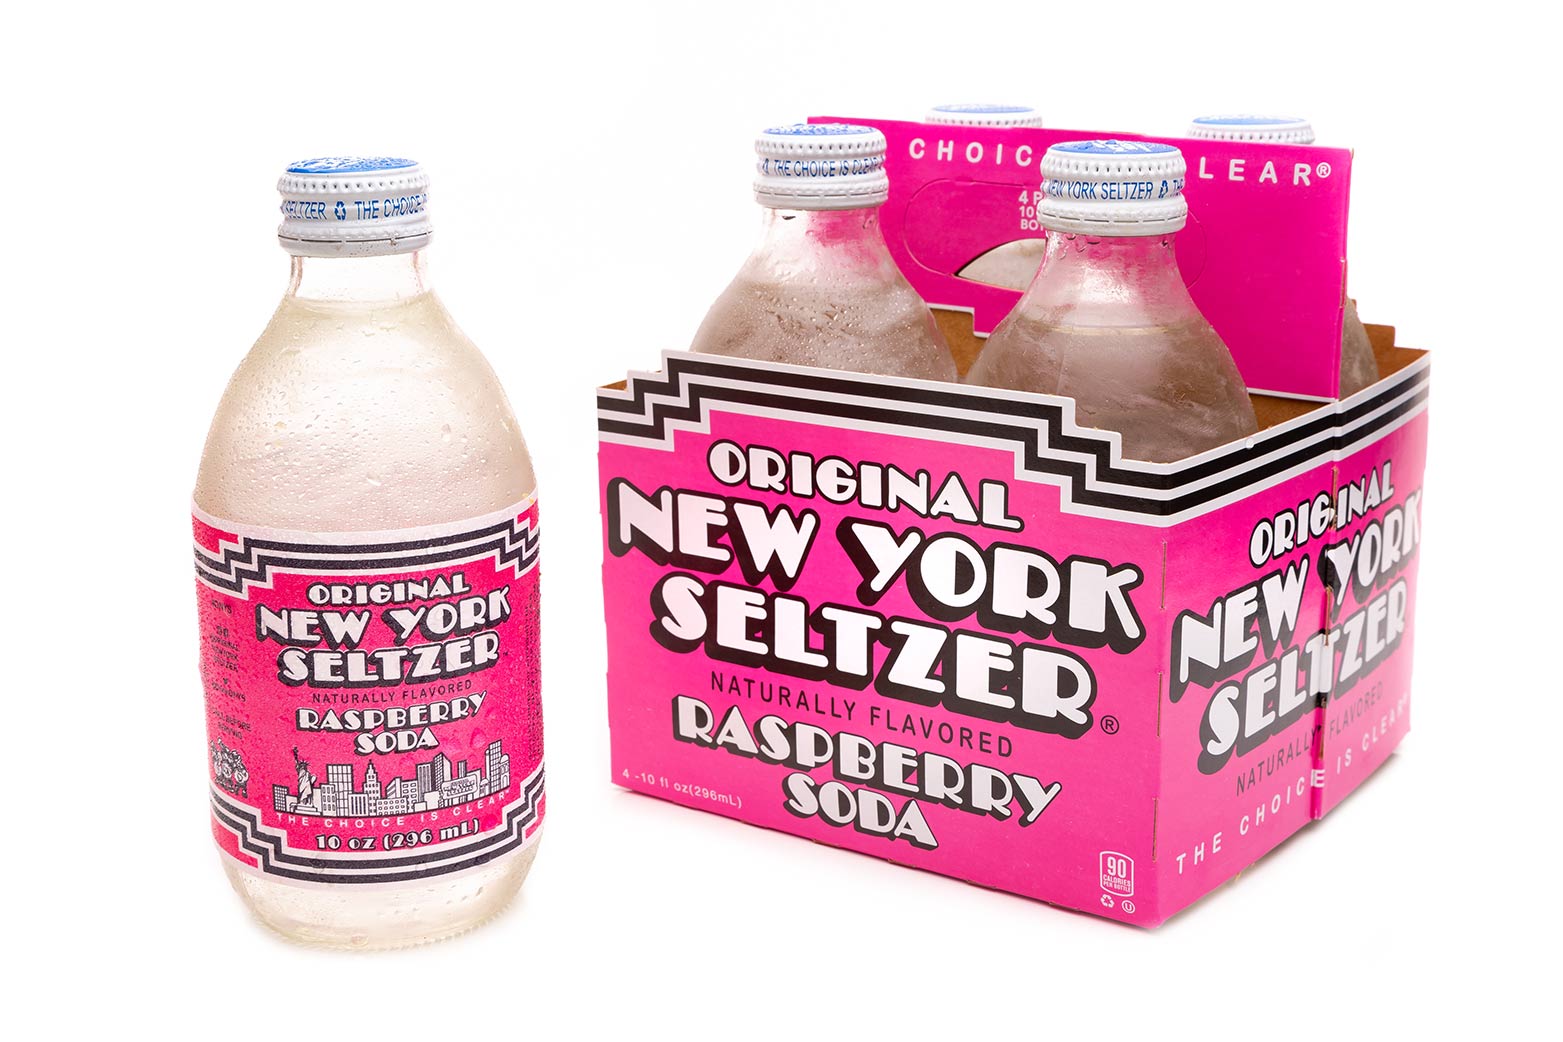 Original New York Seltzer Raspberry 4-pack carrier with bottle